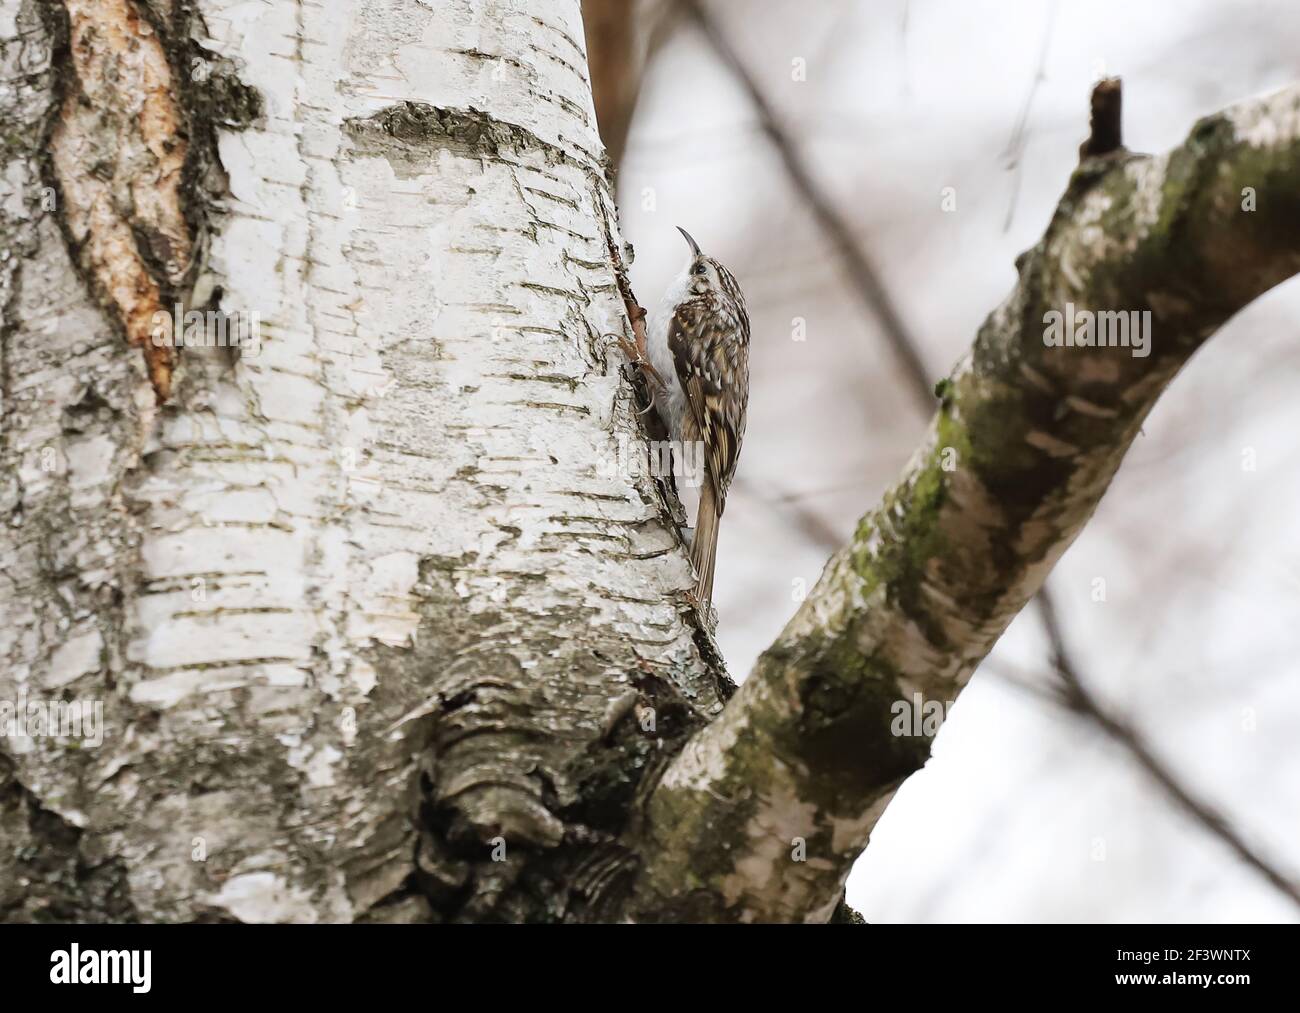 Eurasian treecreeper or common treecreeper (Certhia familiaris) on the bark of a tree. Stock Photo